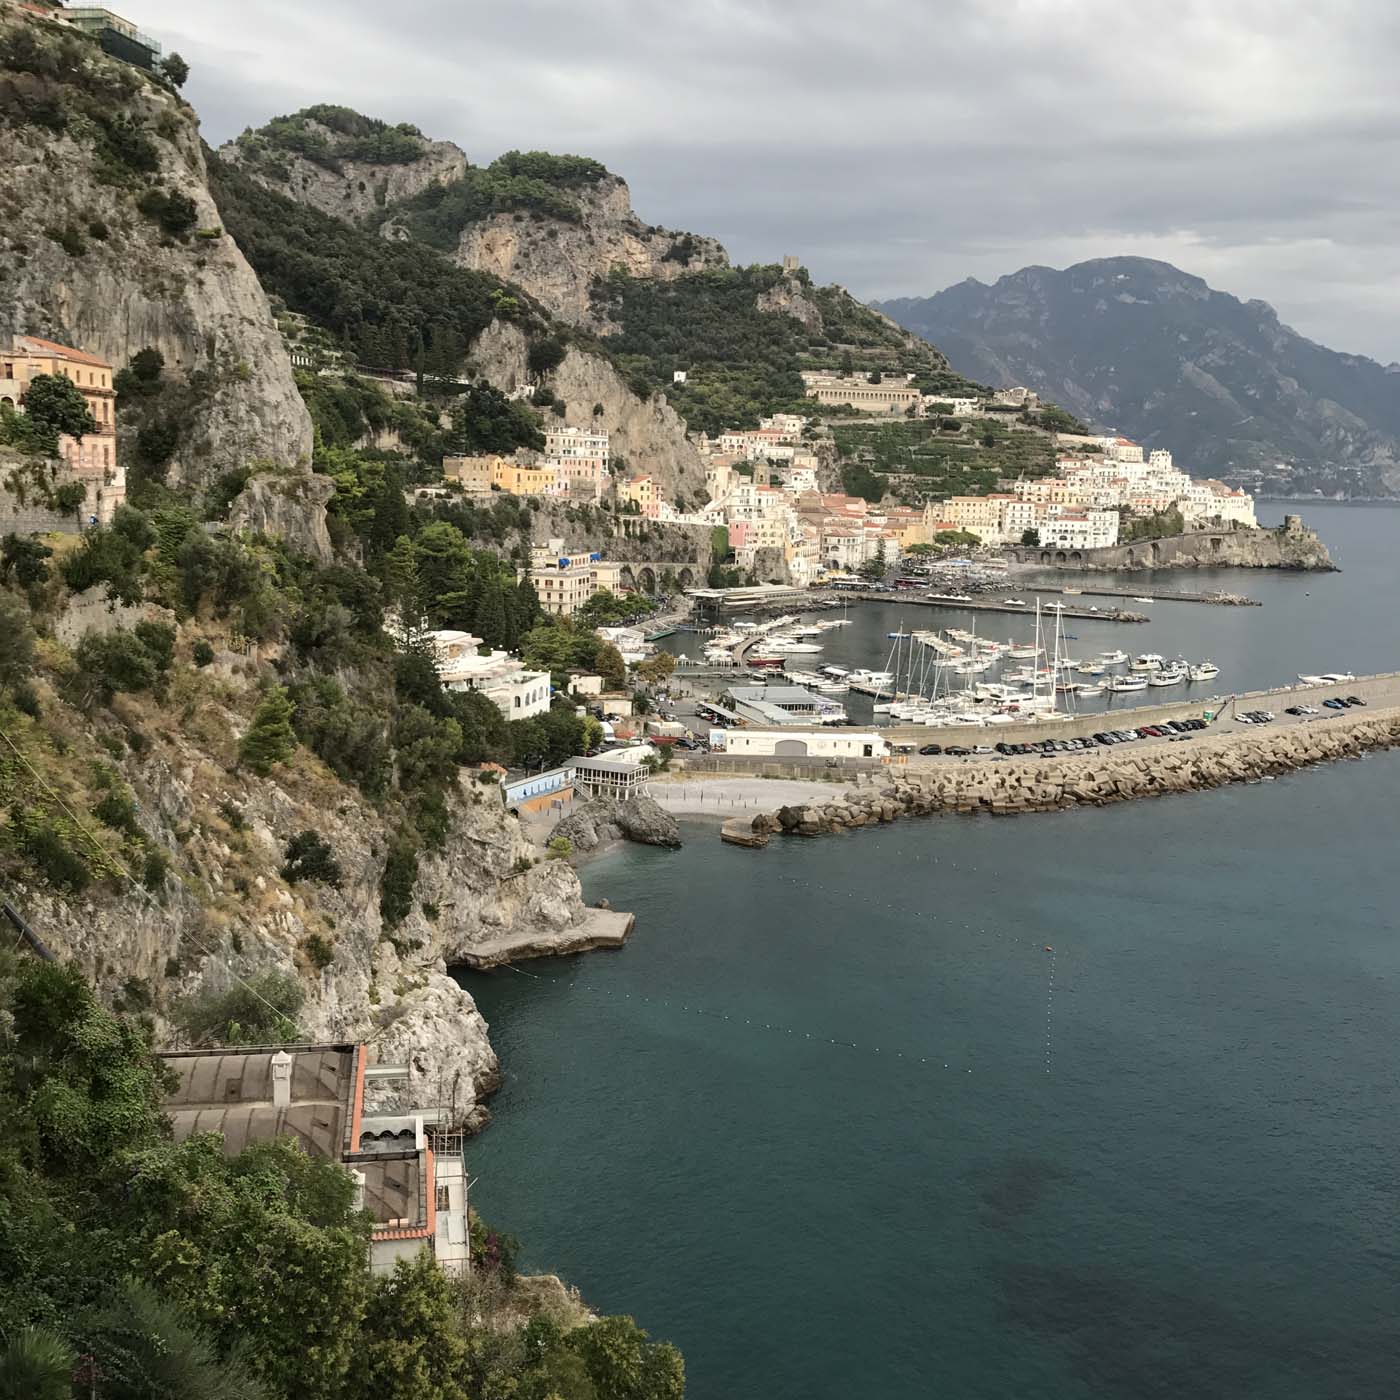 Italy Amalfi Coast